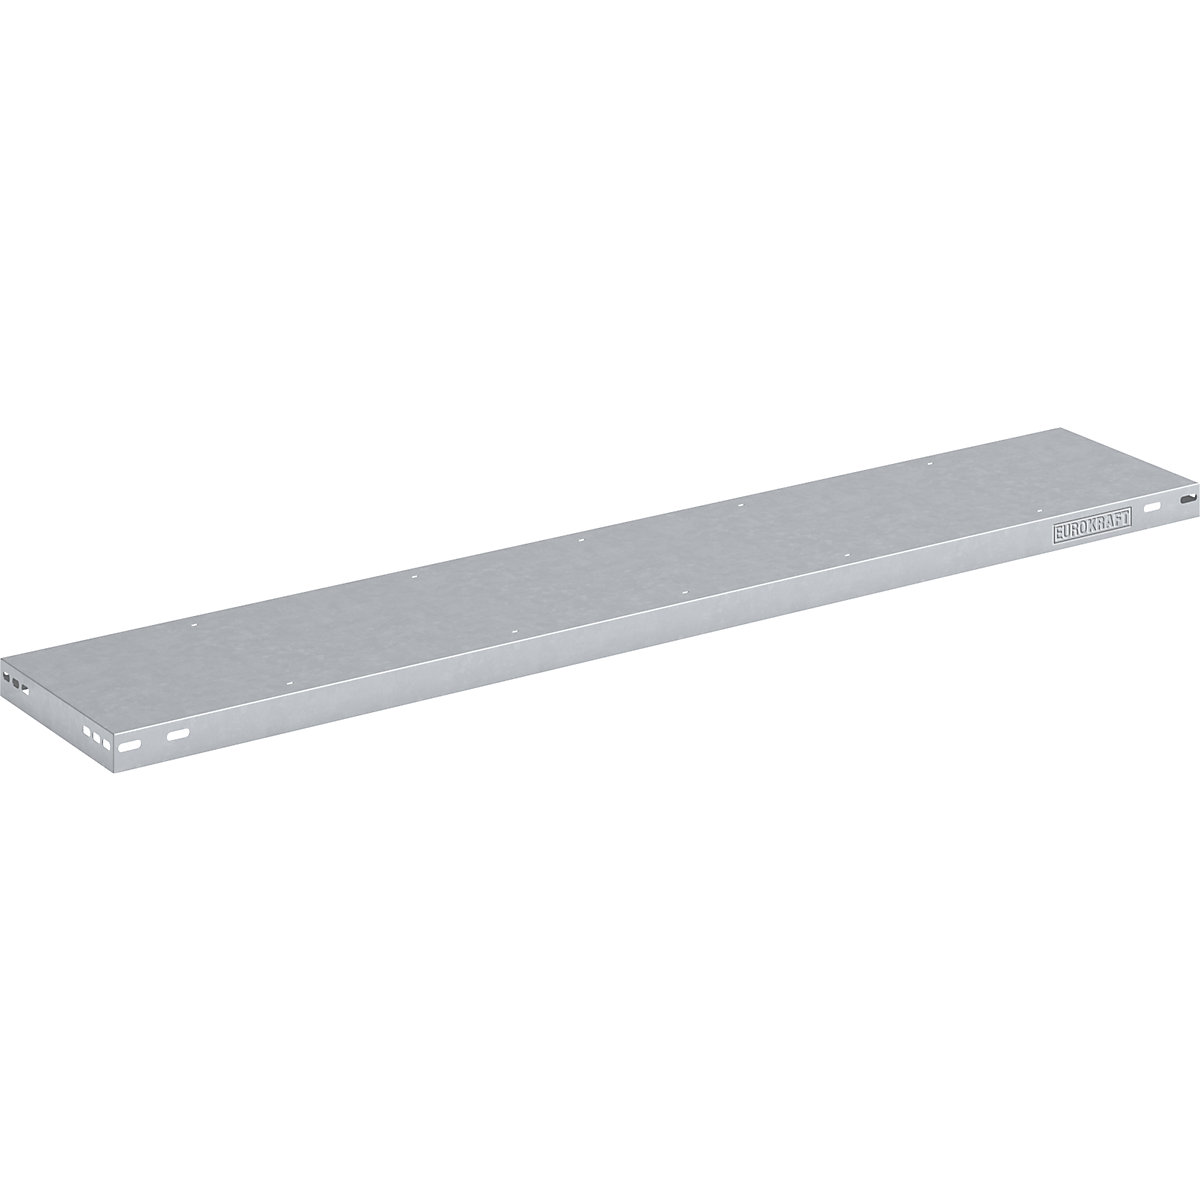 Steel shelf, max. load 125 kg – eurokraft pro, zinc plated, WxD 1300 x 300 mm